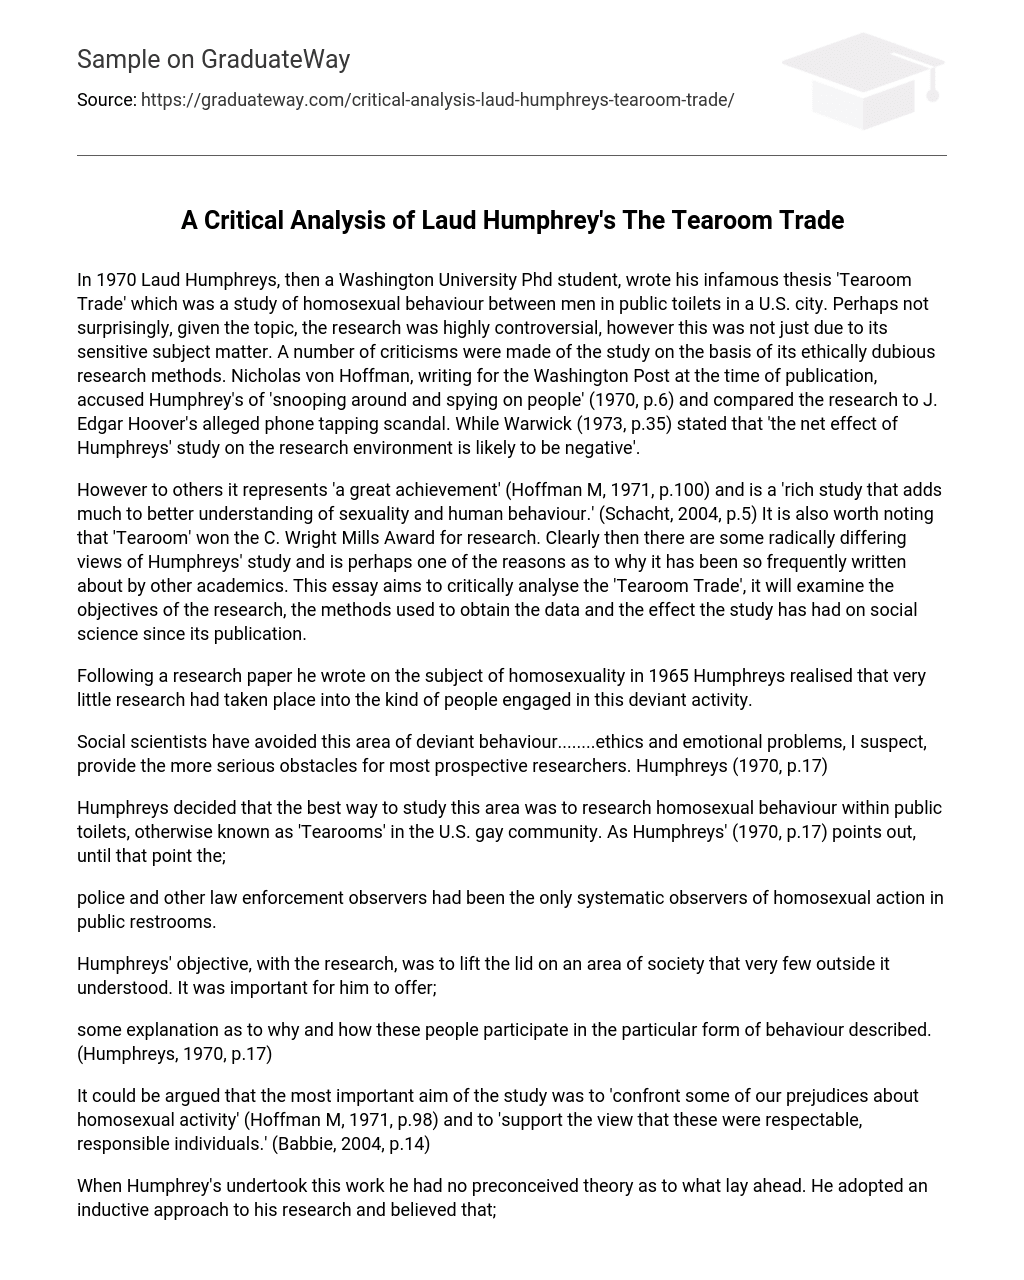 A Critical Analysis of Laud Humphrey’s The Tearoom Trade